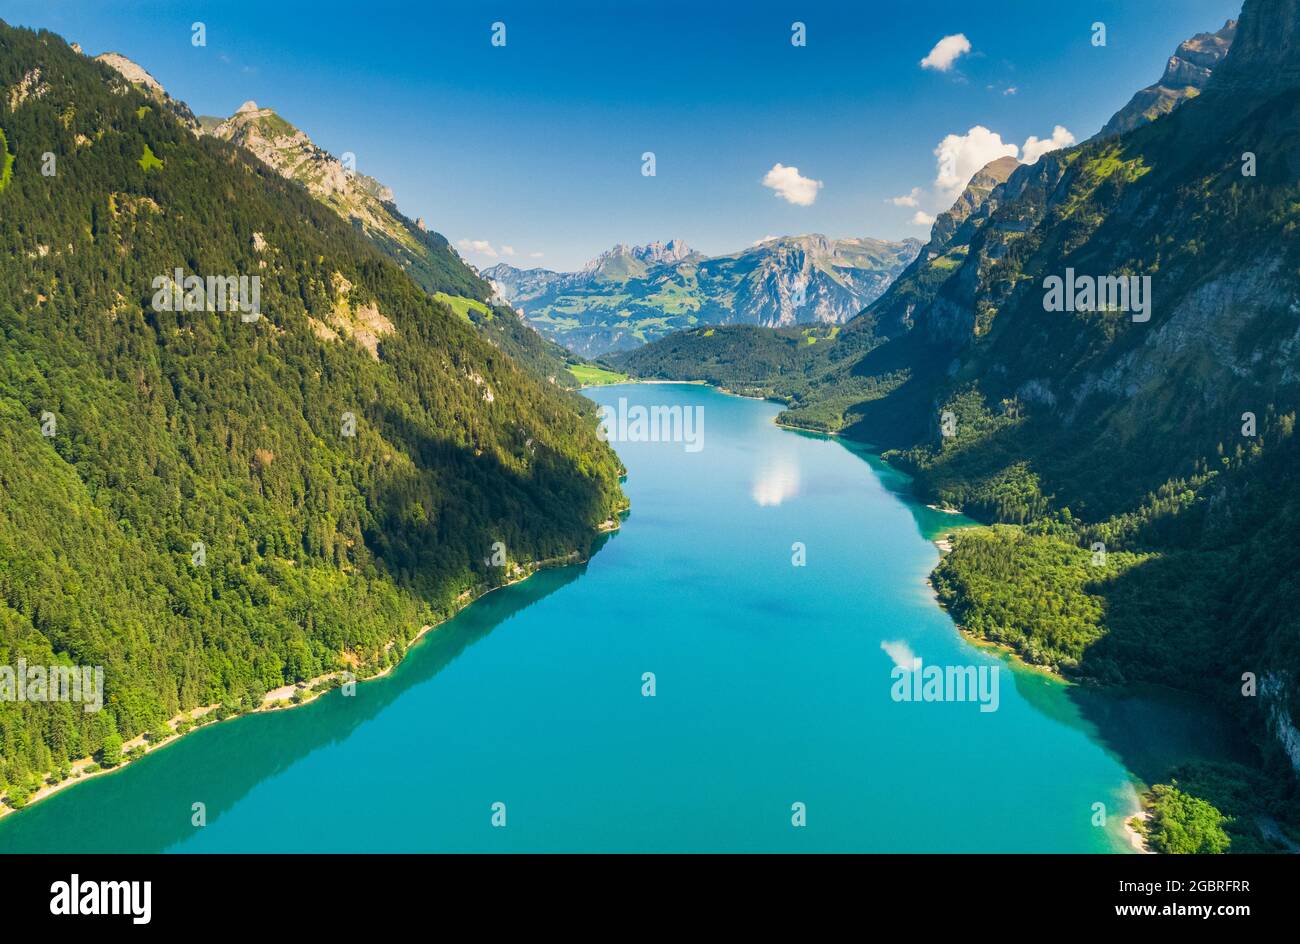 geography / travel, Switzerland, Kloentalersee (Lake Kloental), Glarus, NO-EXCLUSIVE-USE FOR FOLDING-CARD-GREETING-CARD-POSTCARD-USE Stock Photo